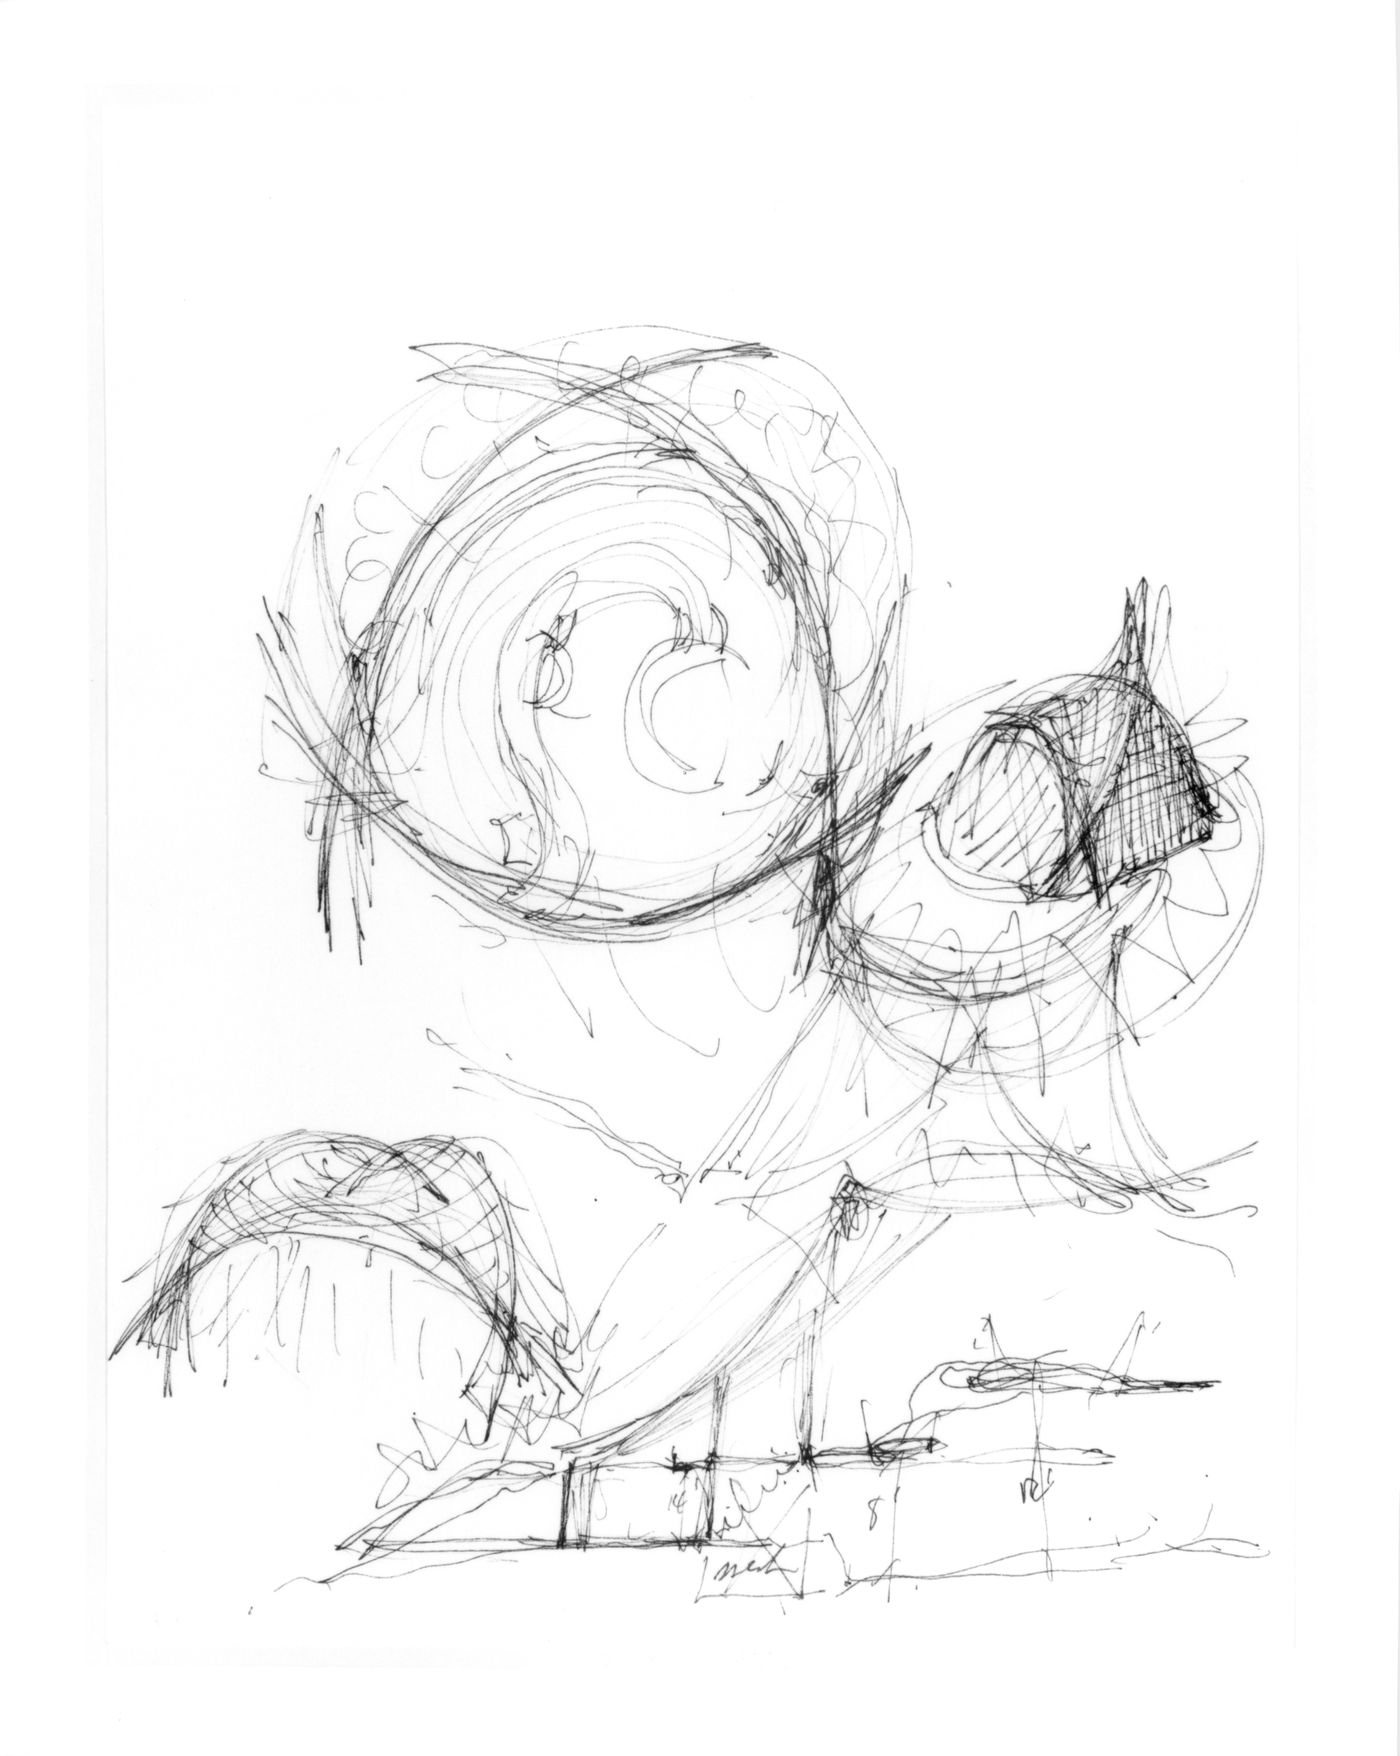 Thumbnail sketch studies of plans